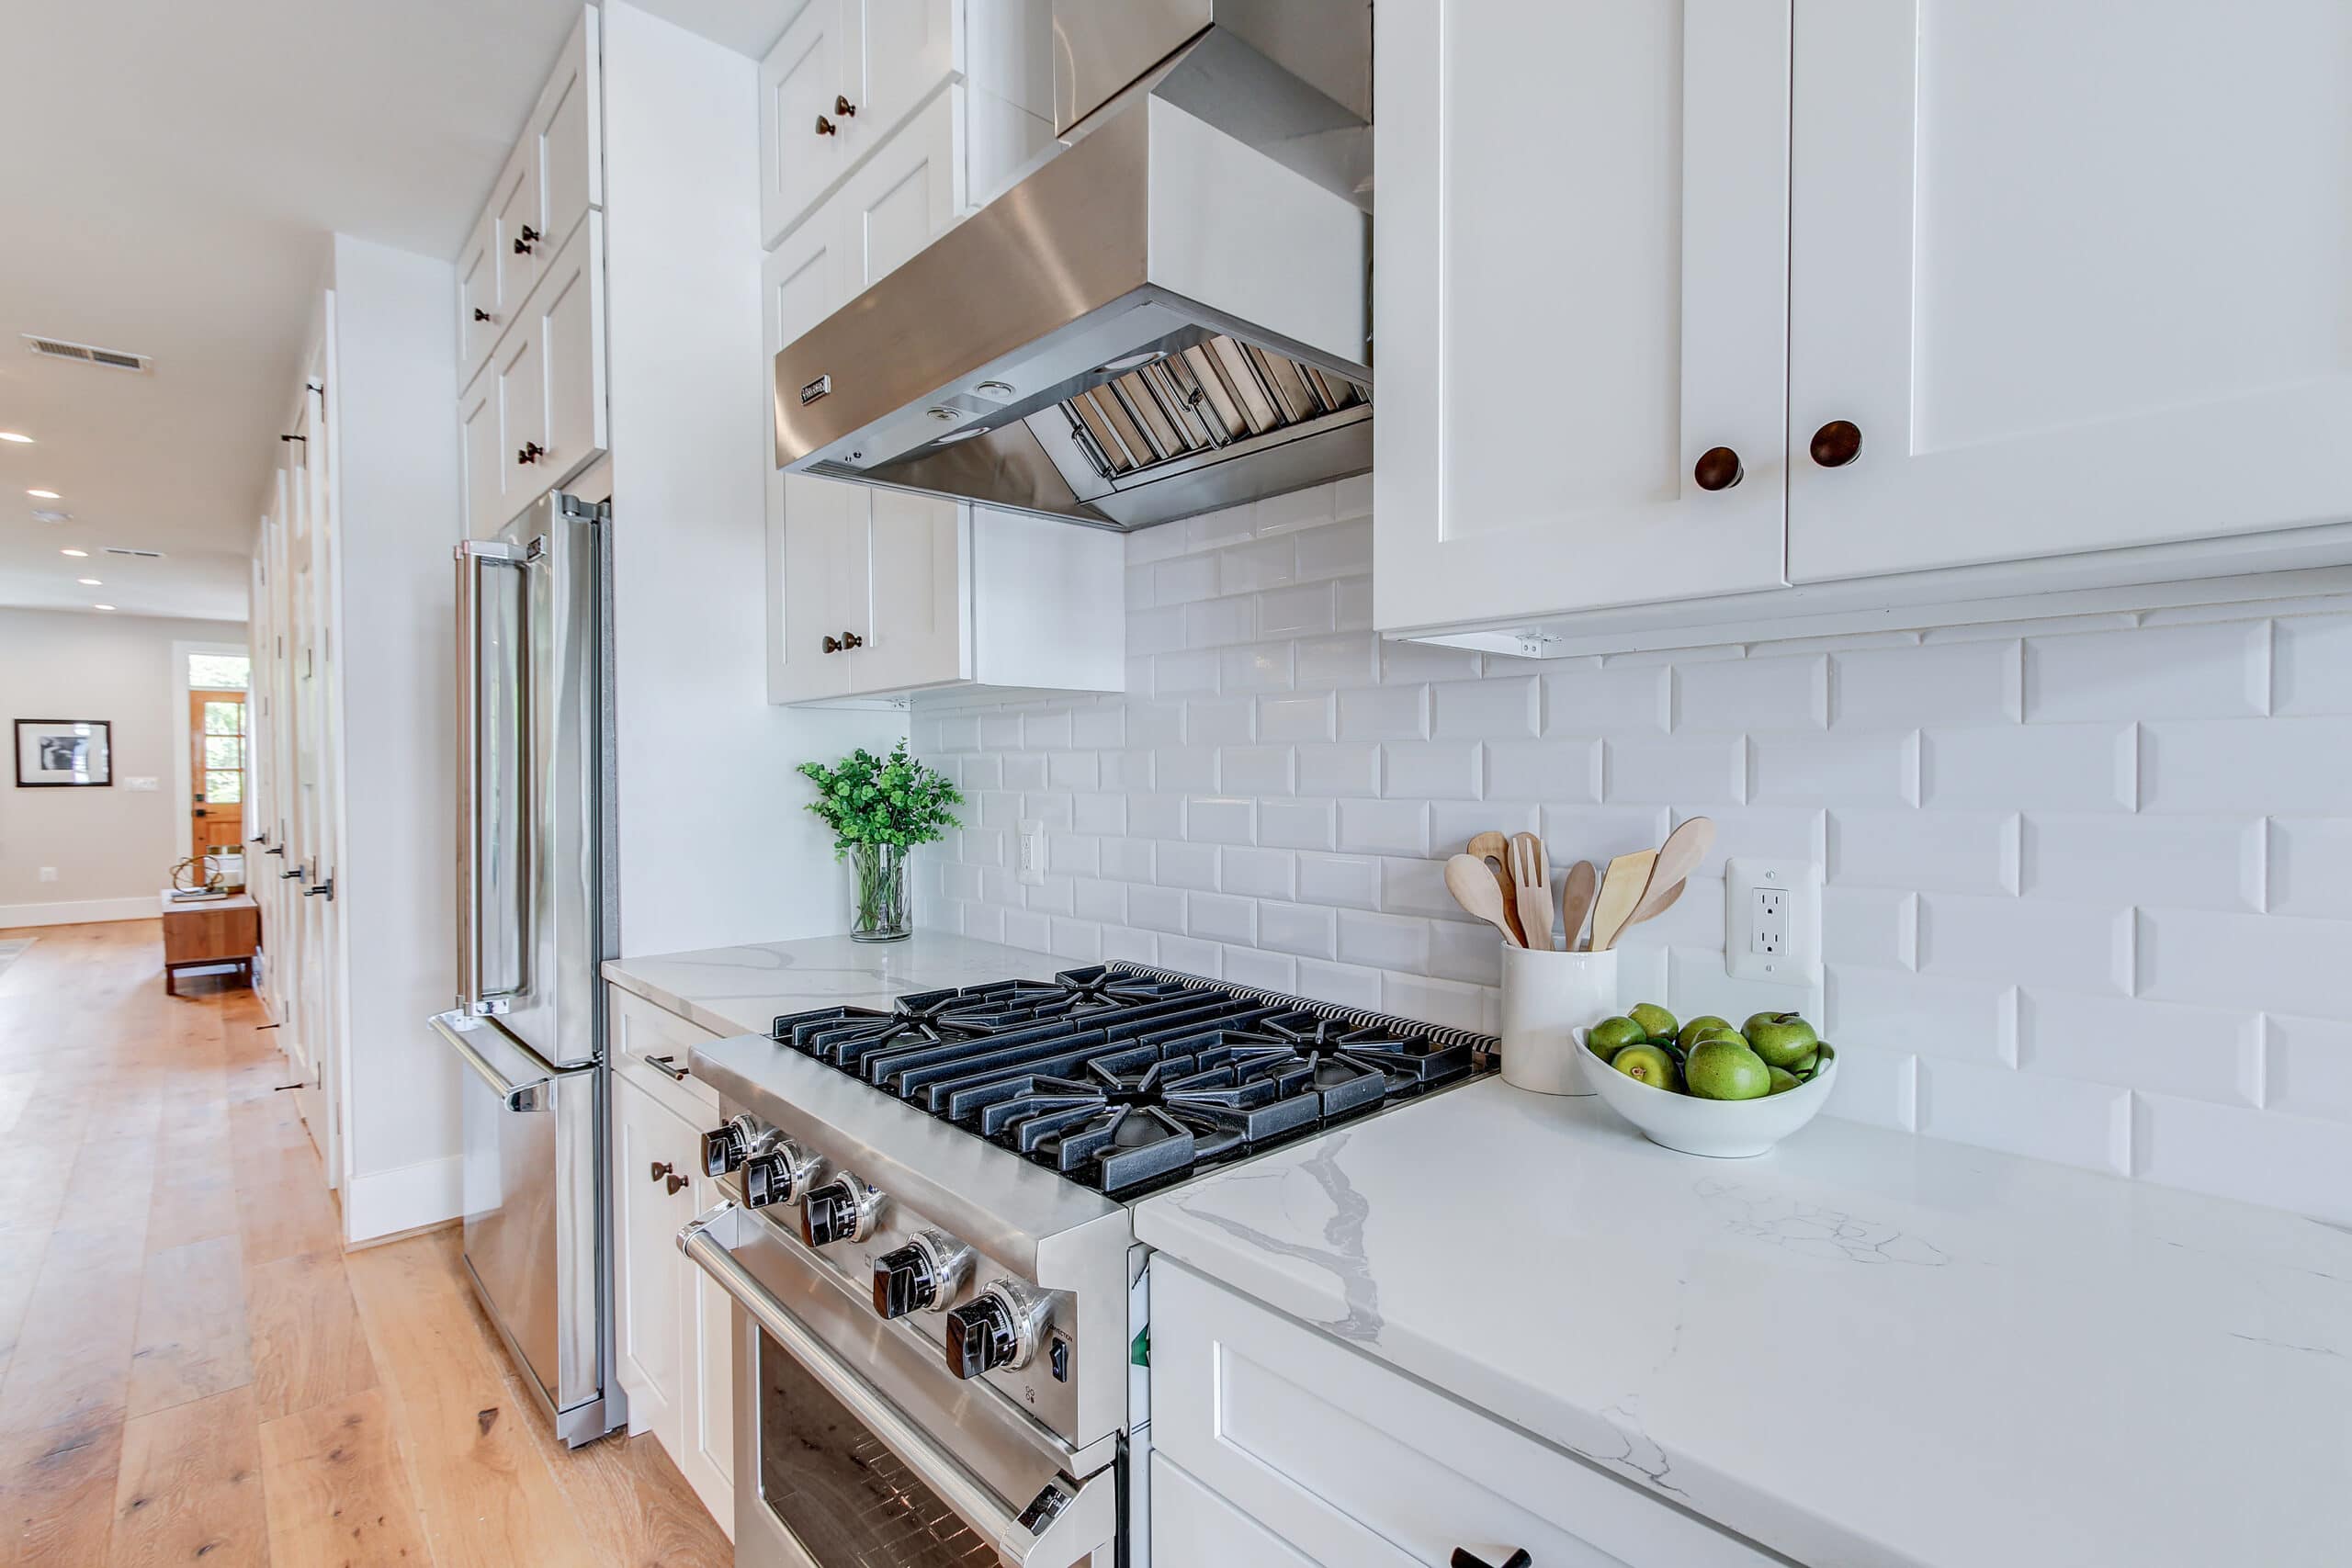 Tips on Choosing the Tile for Your Kitchen Backsplash